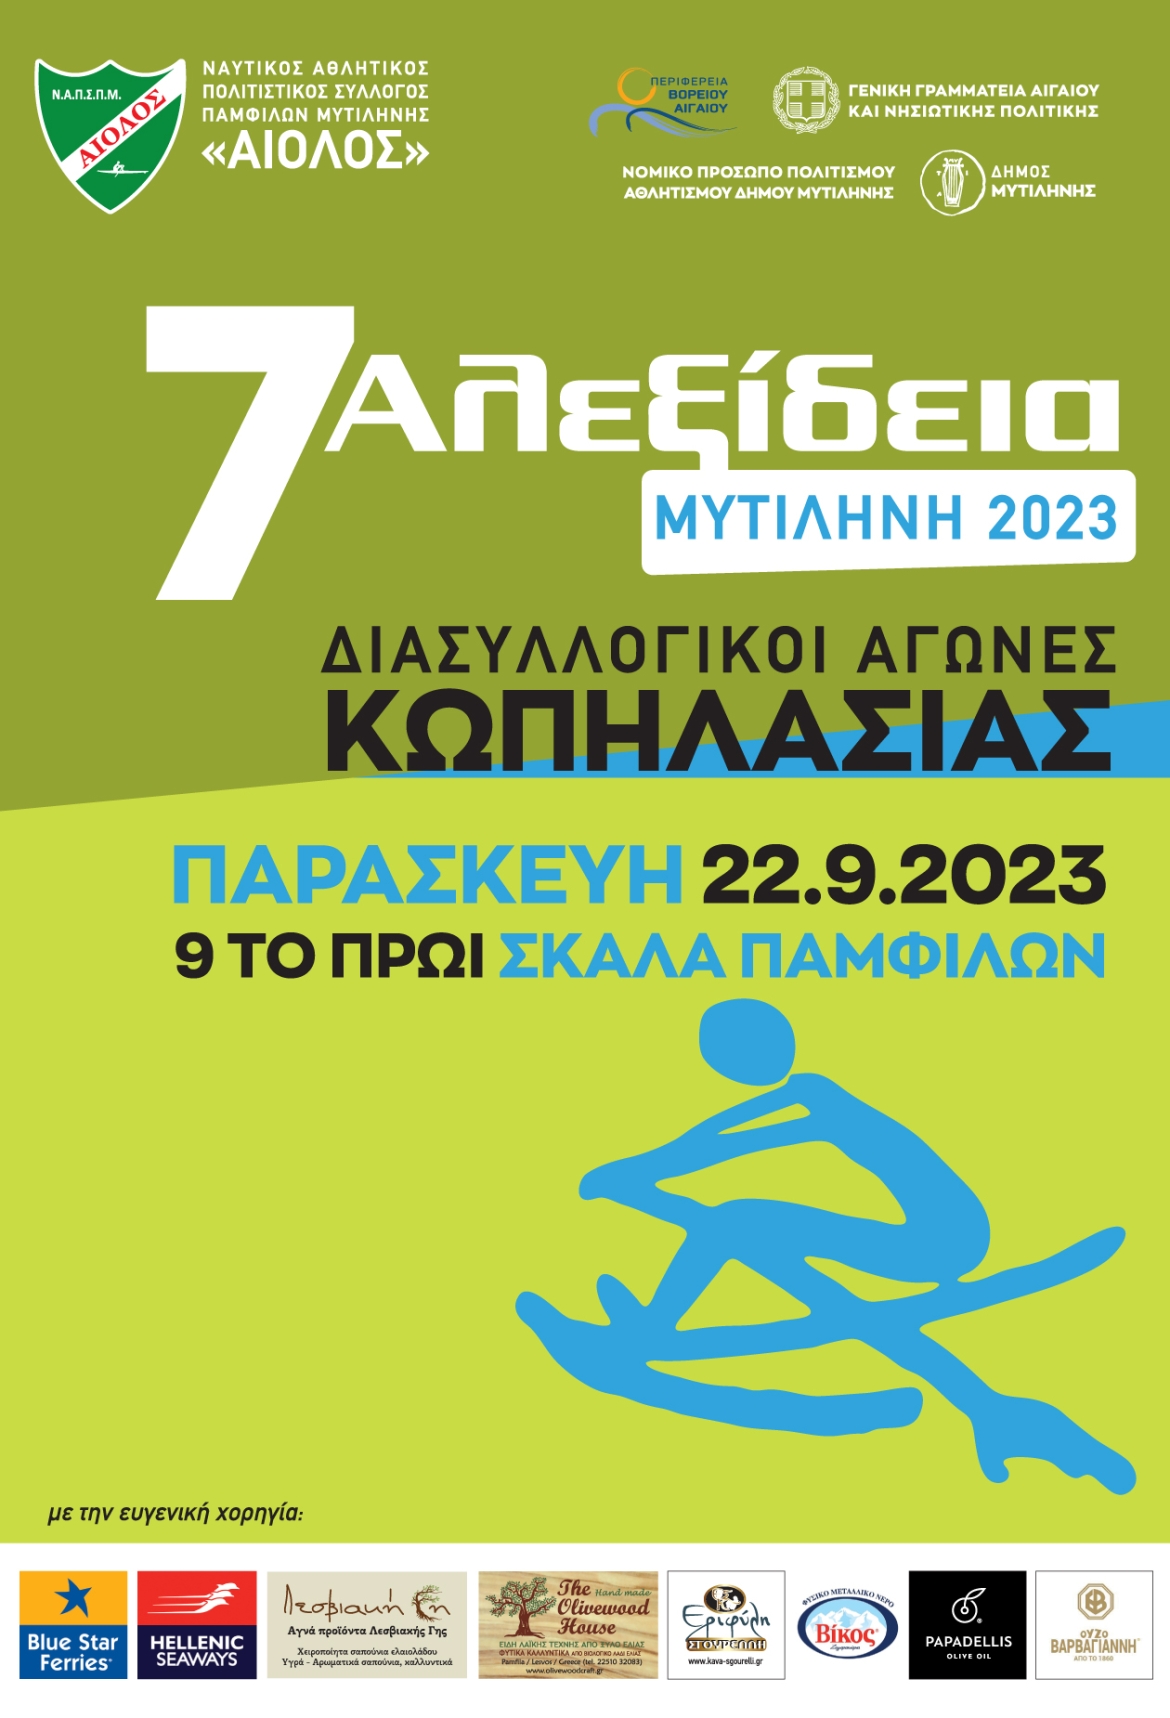 alekdideia-aiolos-2023.jpg (1170×1718)